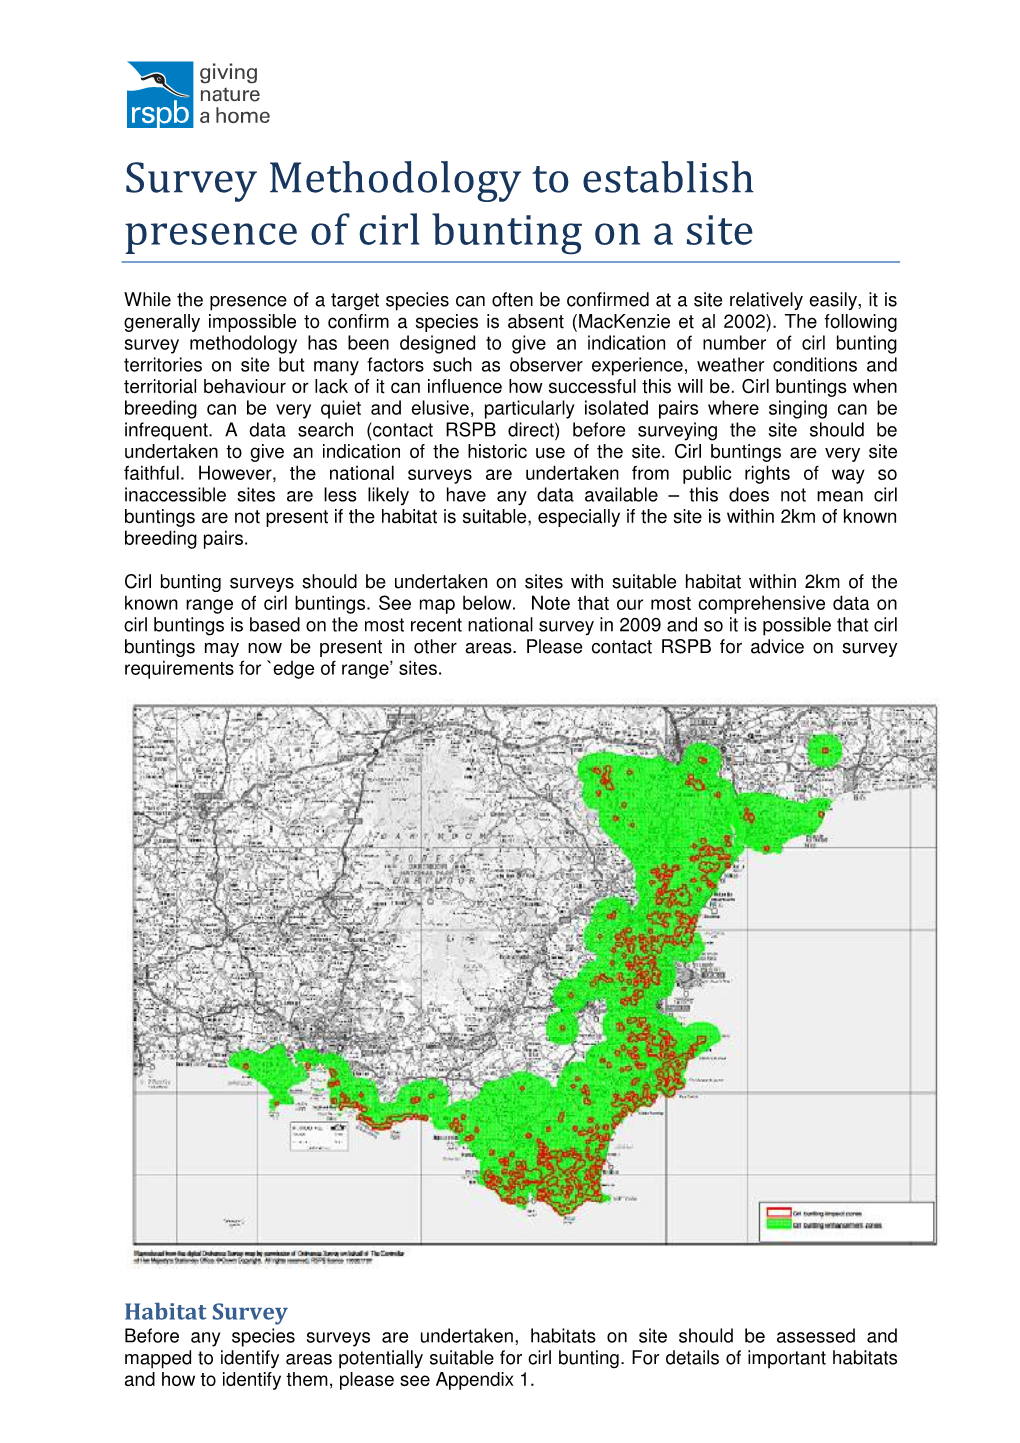 Survey Methodology to Establish Presence of Cirl Bunting on a Site